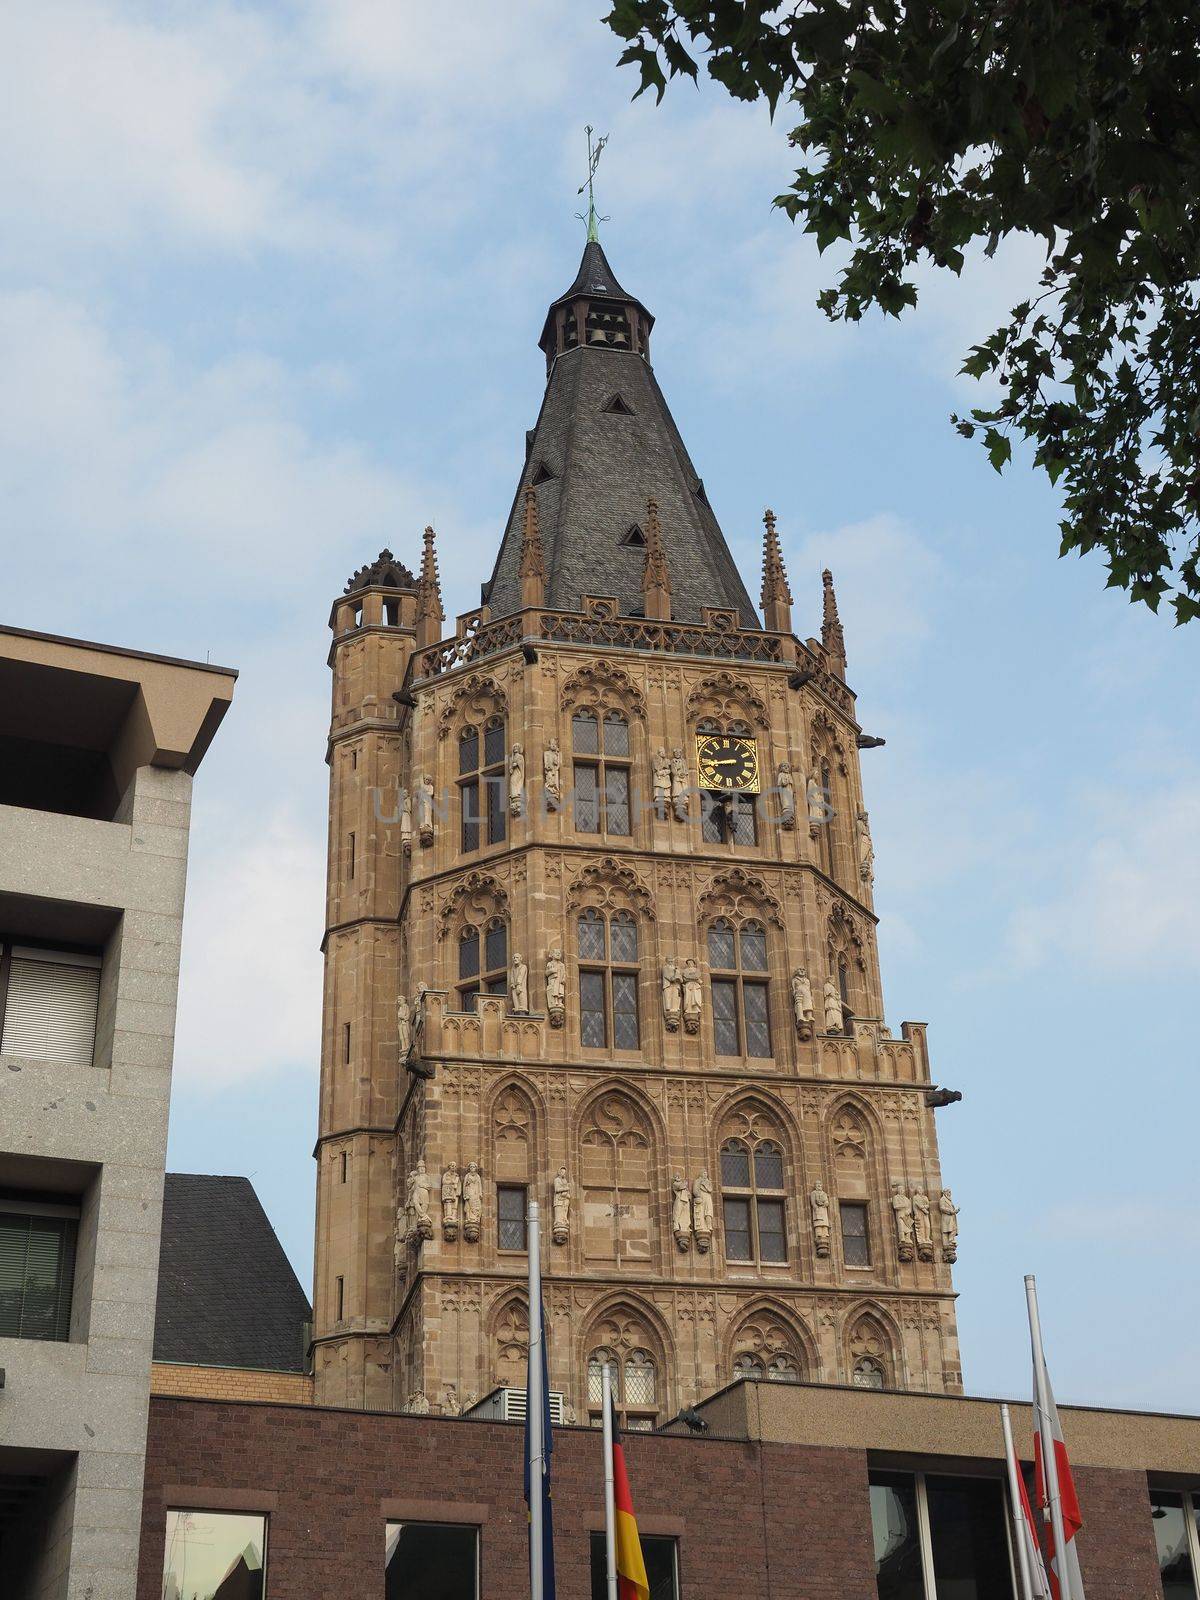 Koelner Rathaus (Town Hall) in Koeln by claudiodivizia